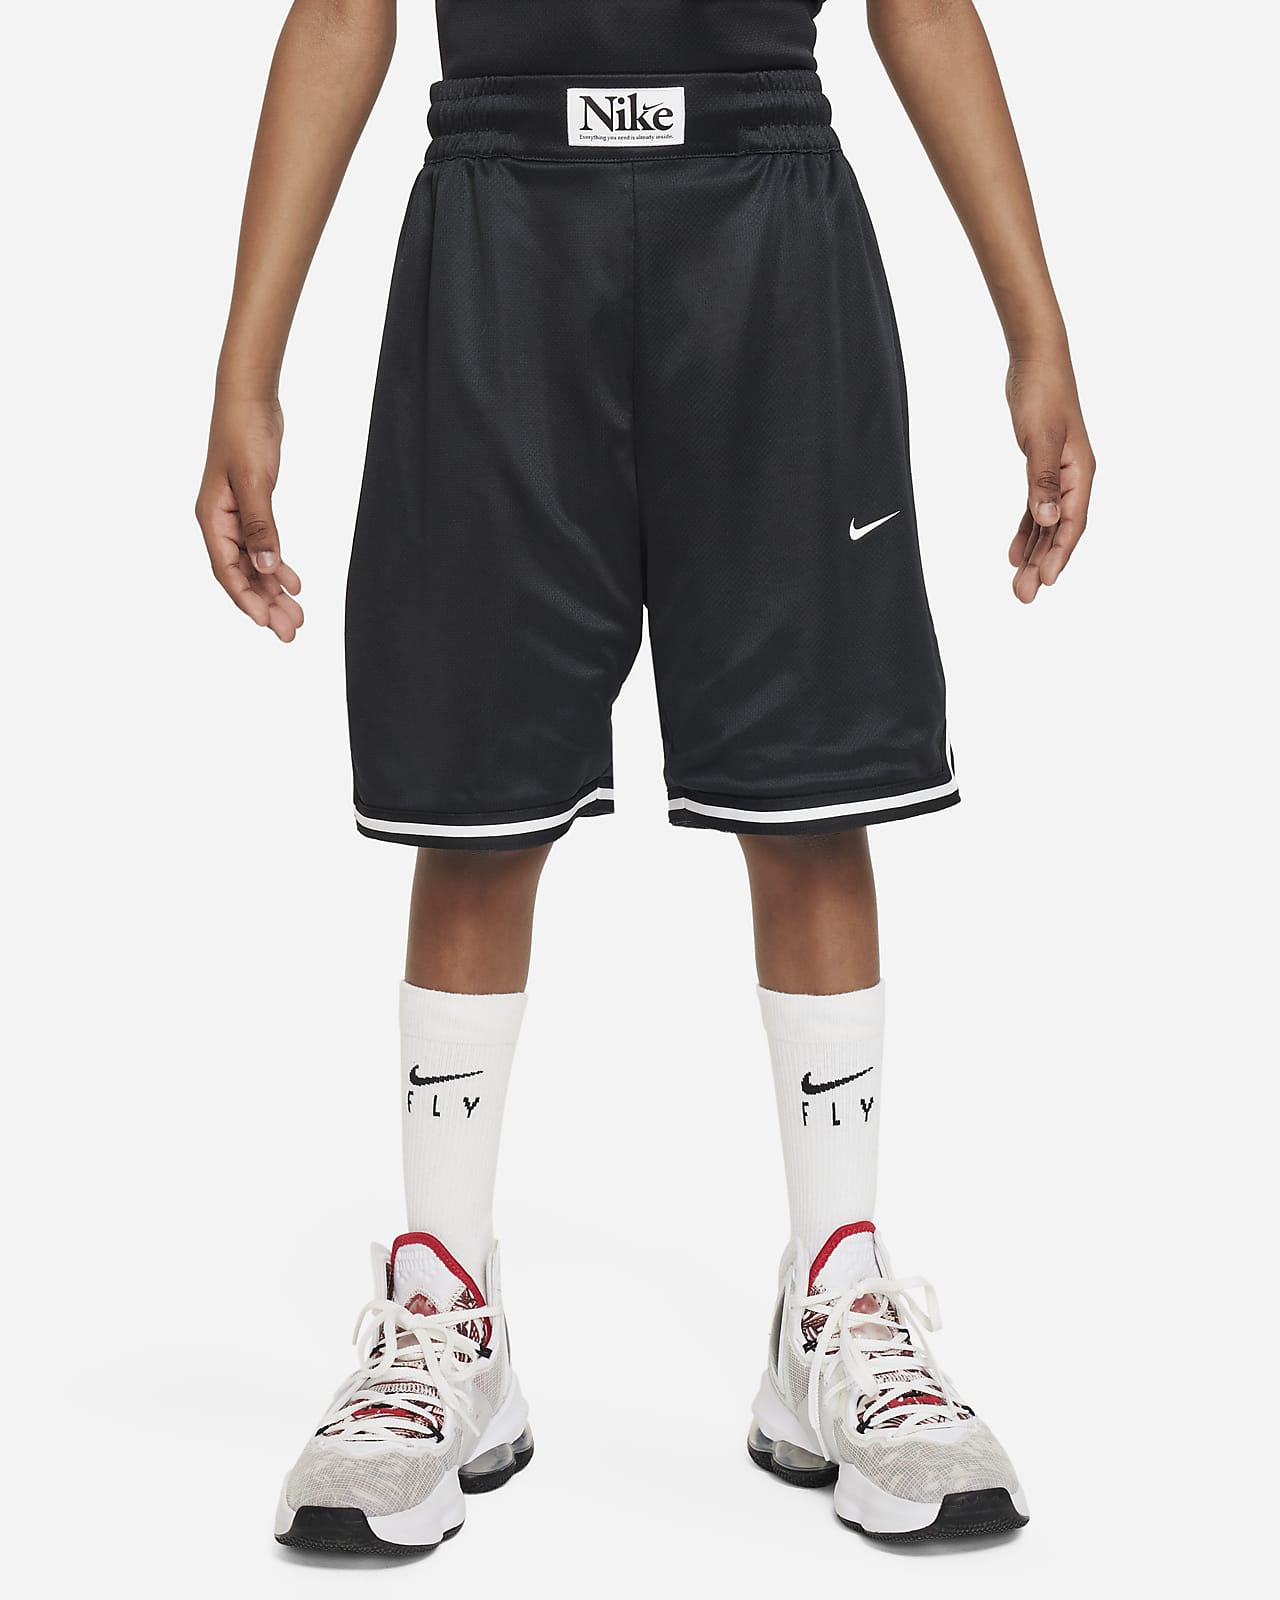 Nike Culture of Basketball DNA Older Kids' Reversible Basketball Shorts